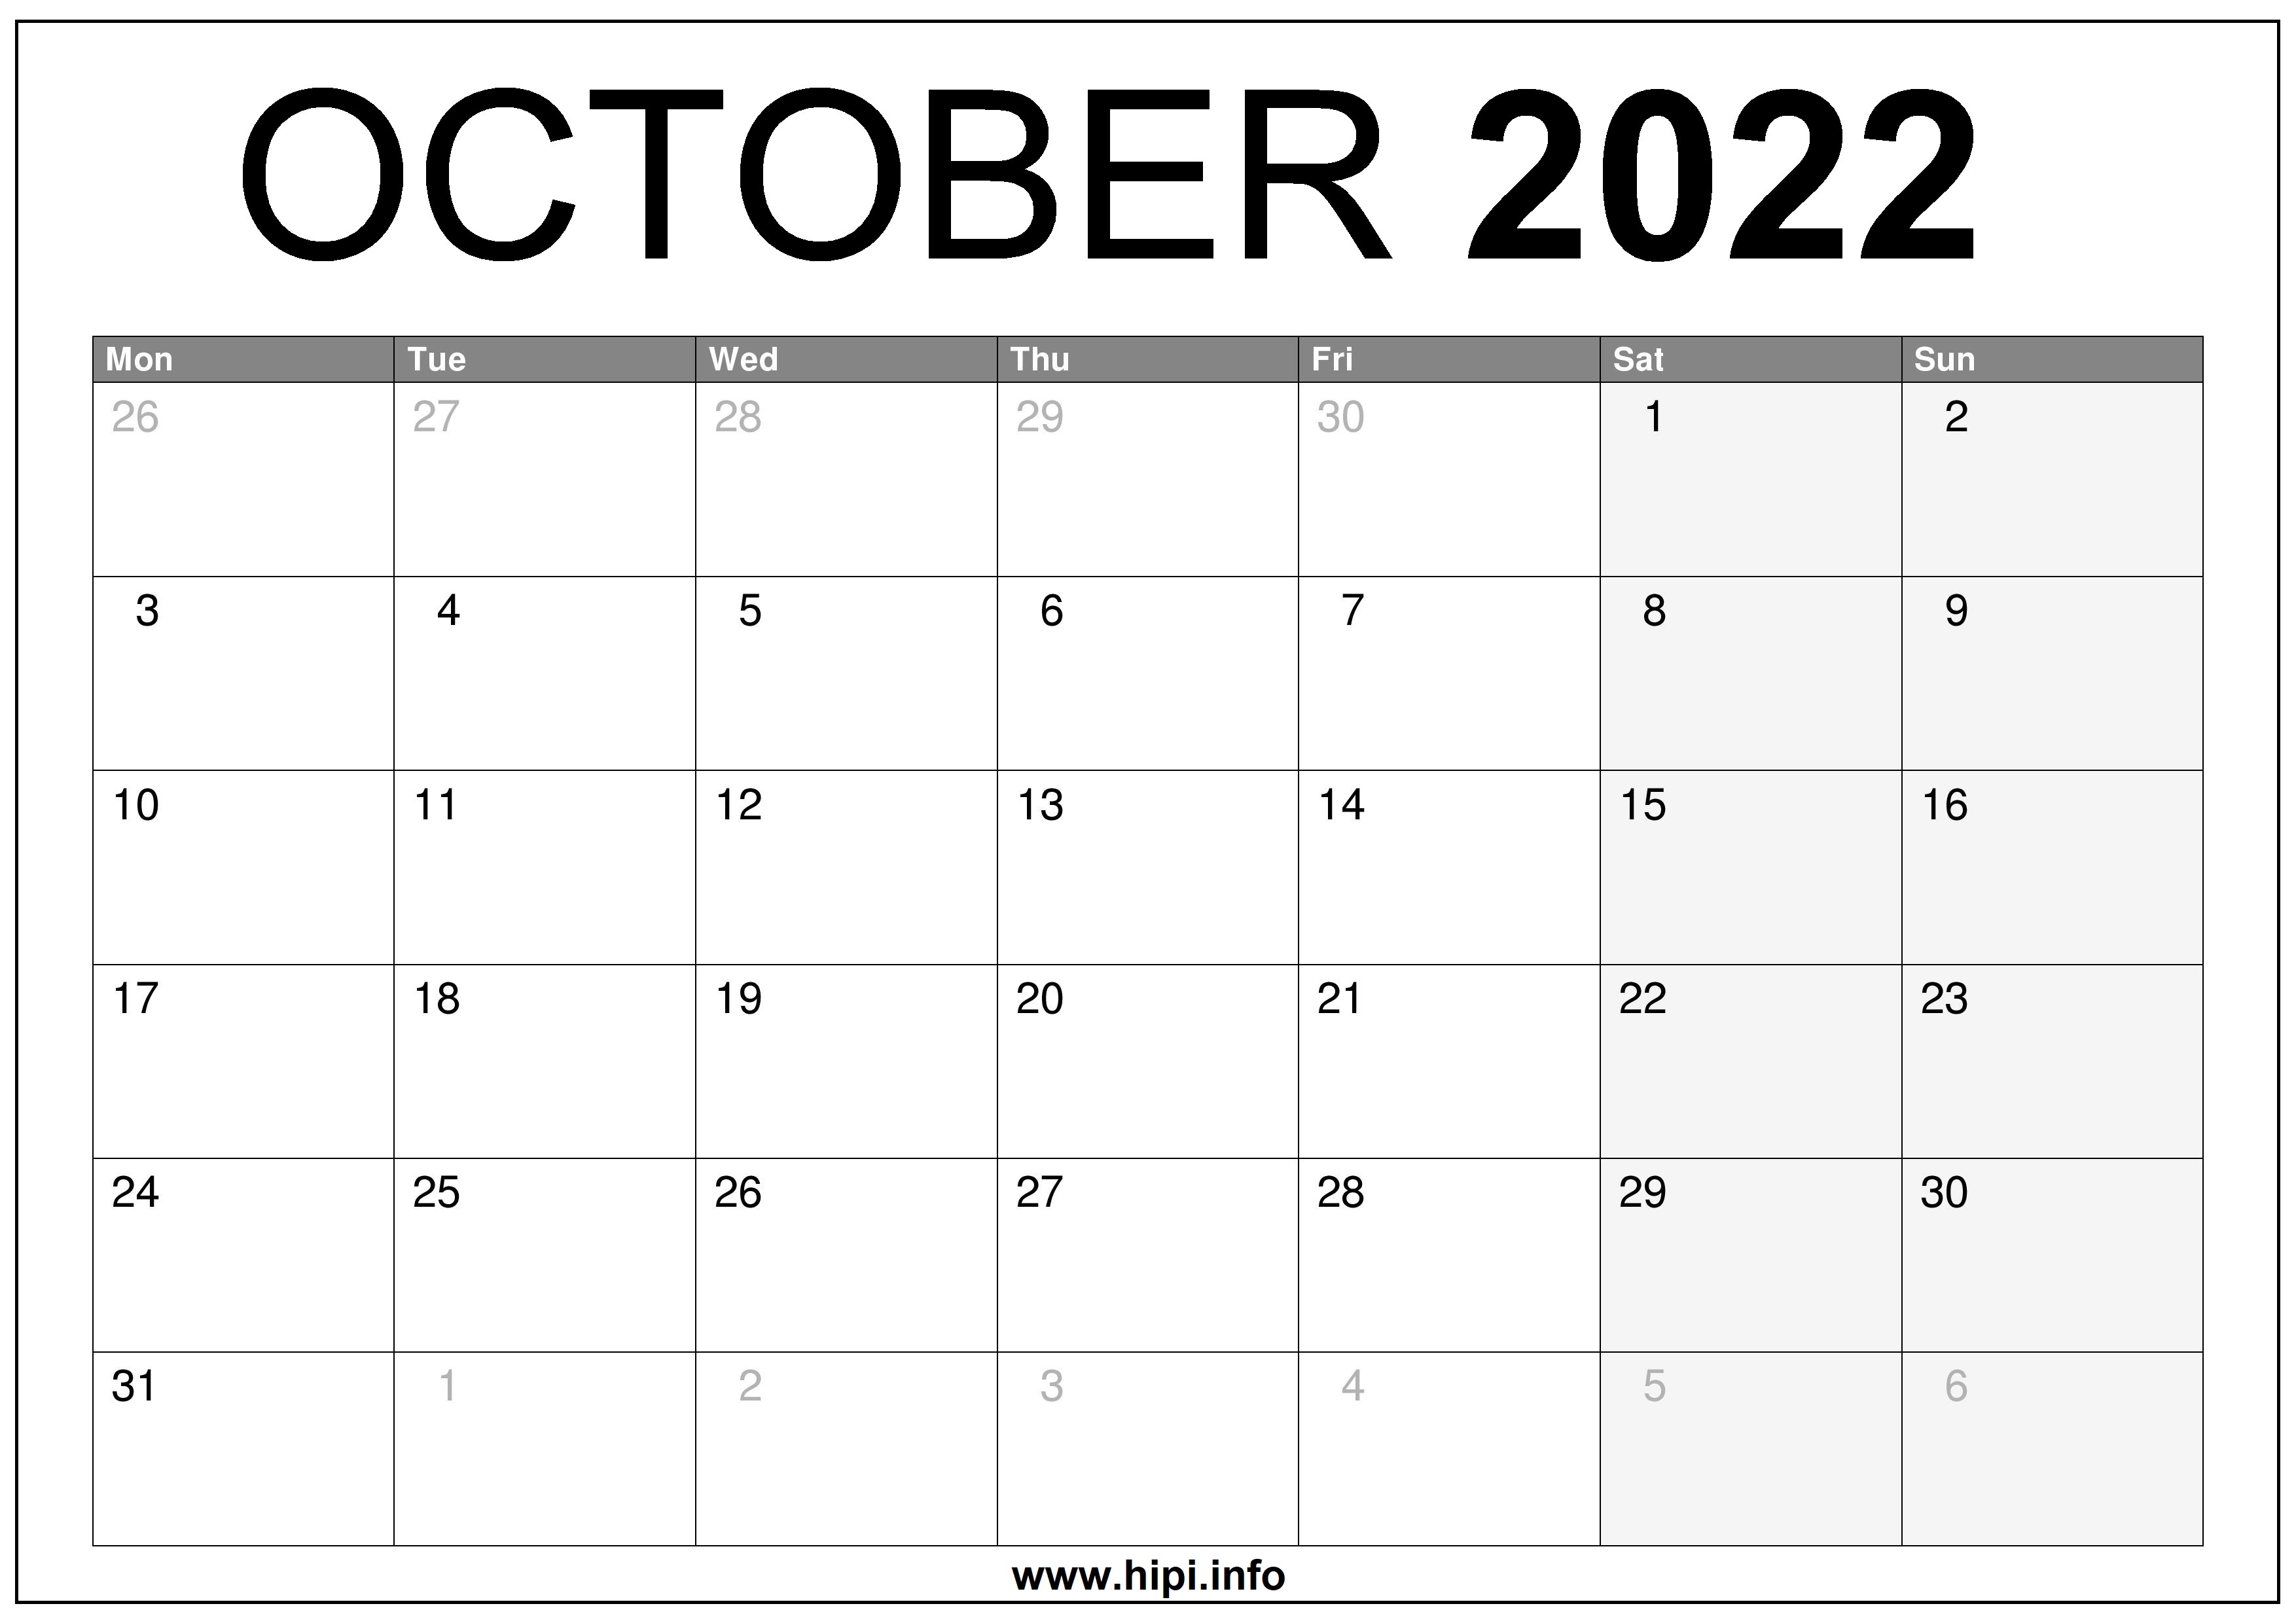 October 2022 Calendar Template Printable October 2022 Uk Calendar Printable Free - Hipi.info | Calendars Printable  Free